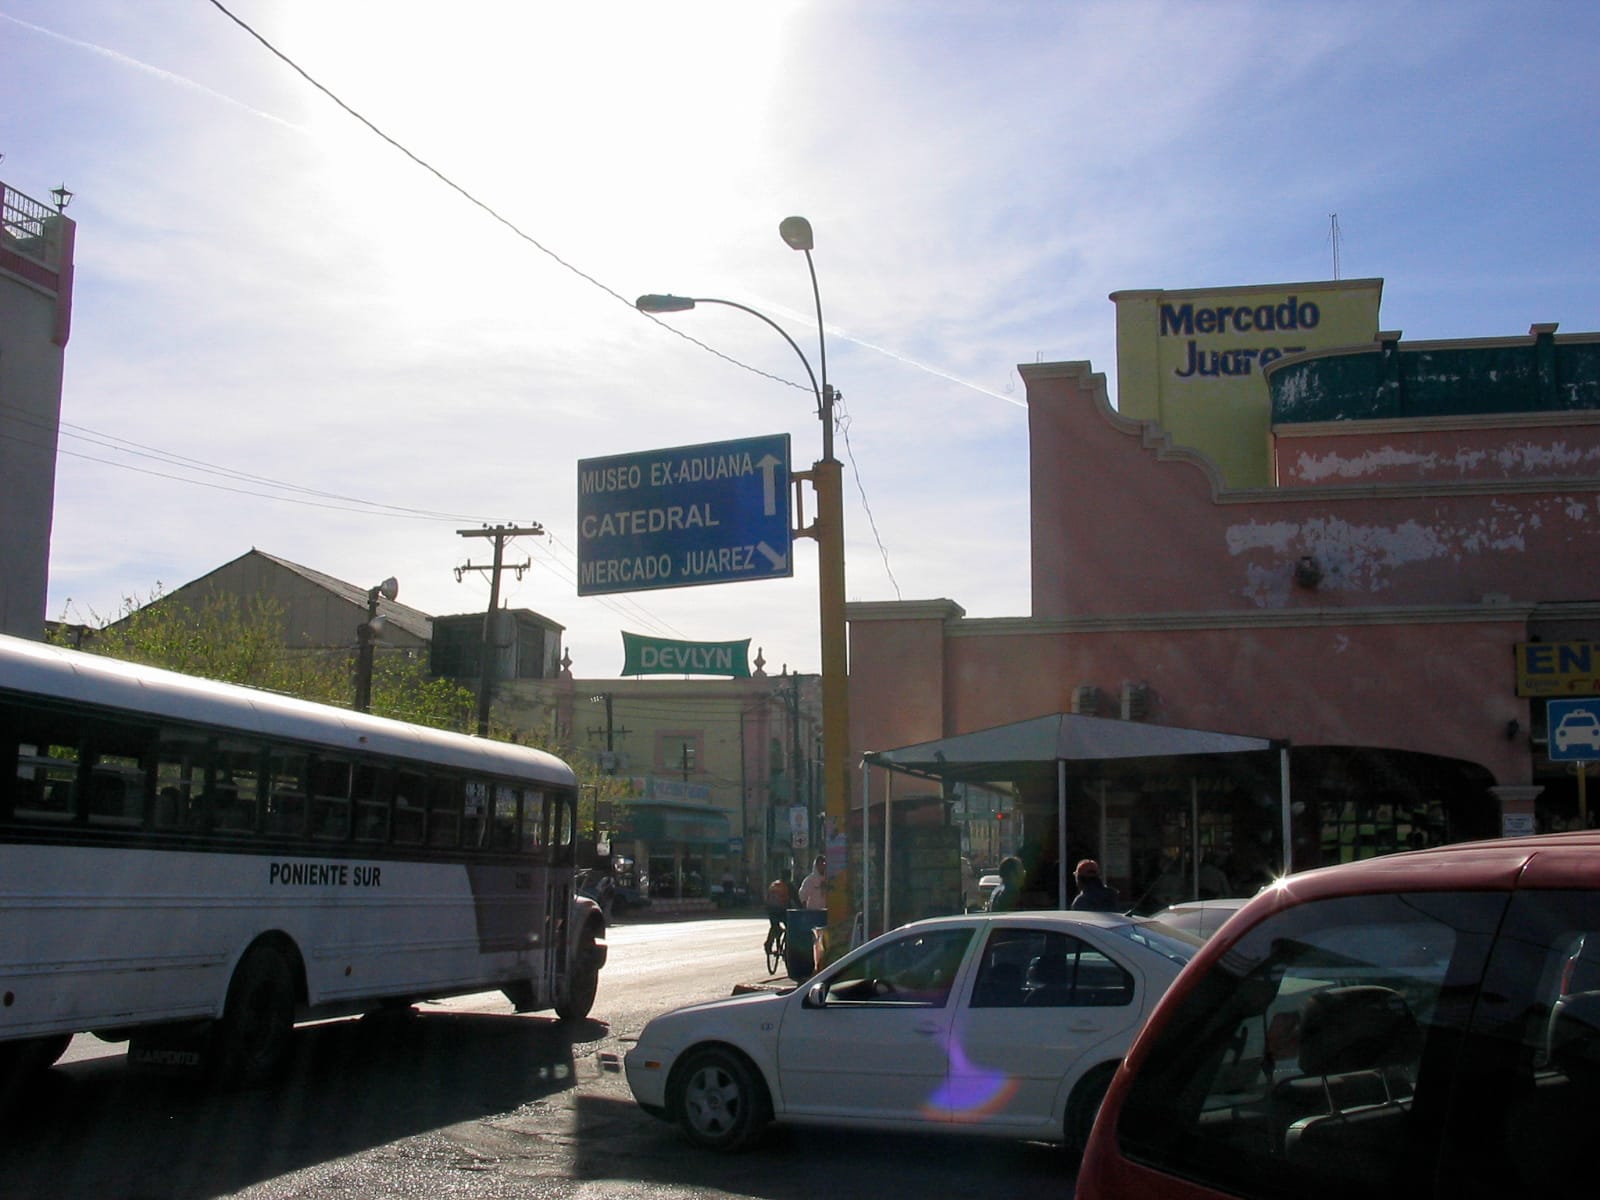 Tourism in Juarez